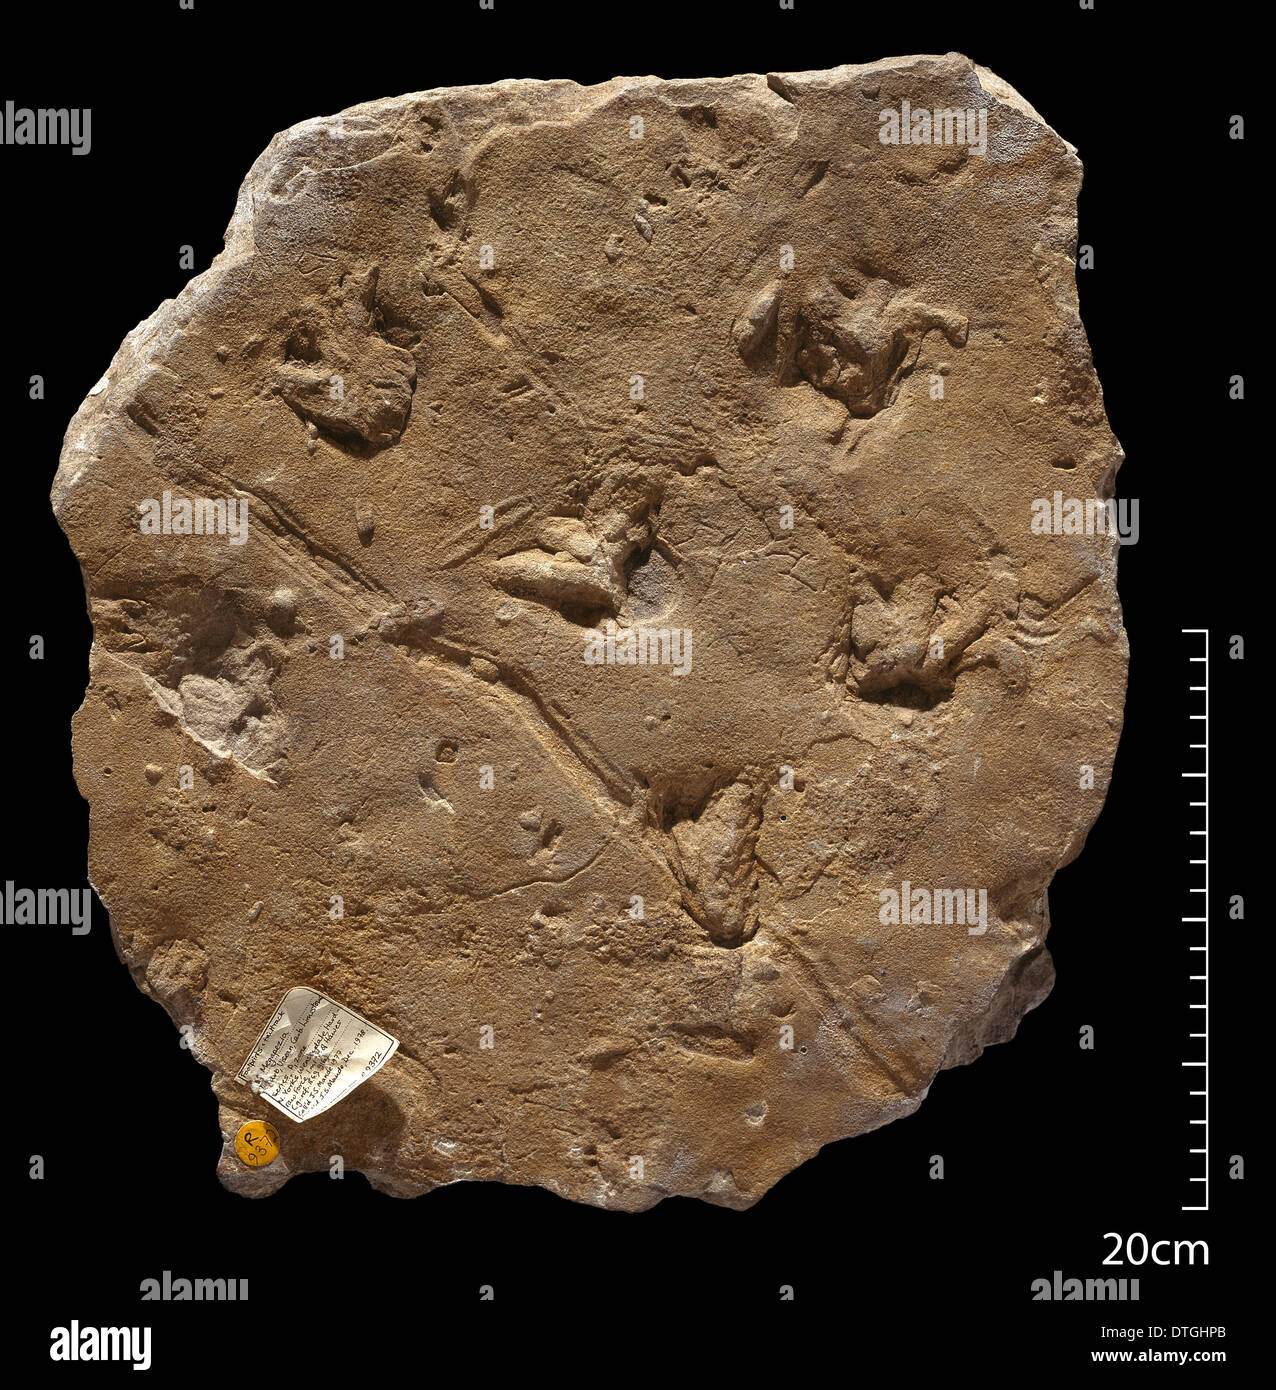 Fossil amphibian footprints Stock Photo